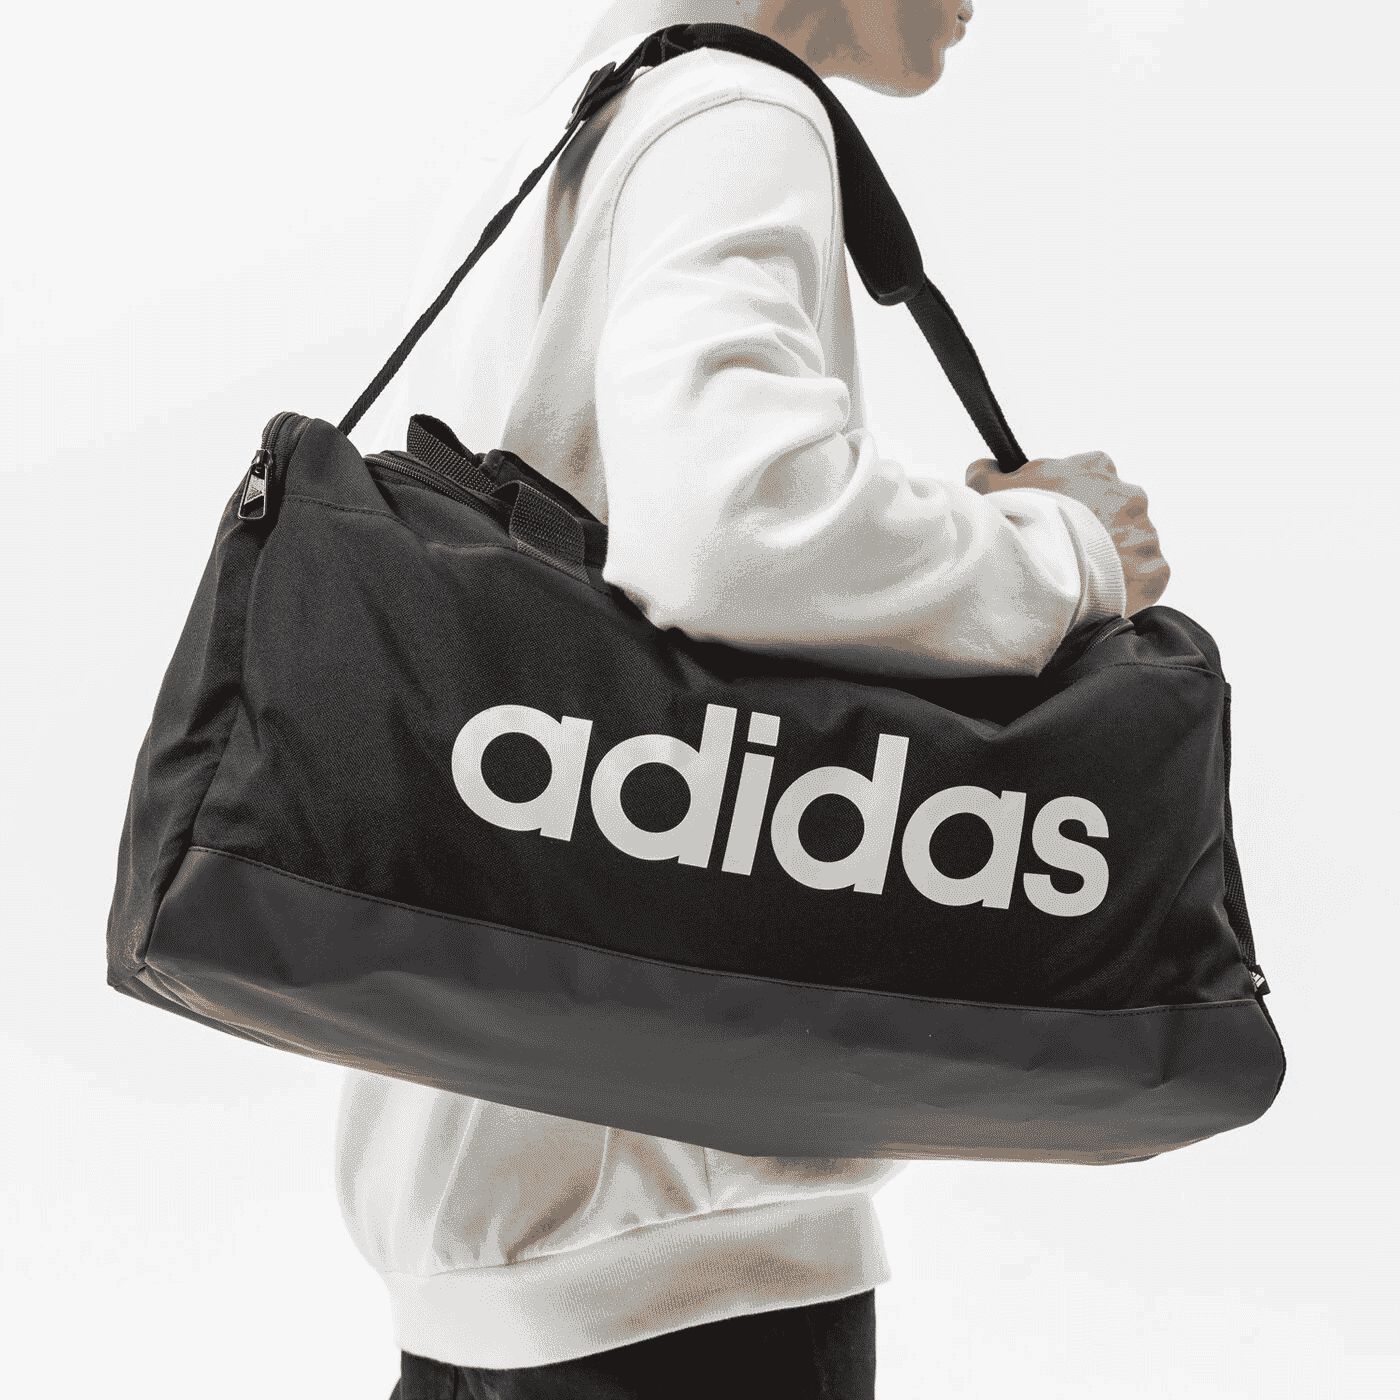 Túi Trống Adidas Essentials Logo Duffel Bag Extra Small GN1925 Màu Đen